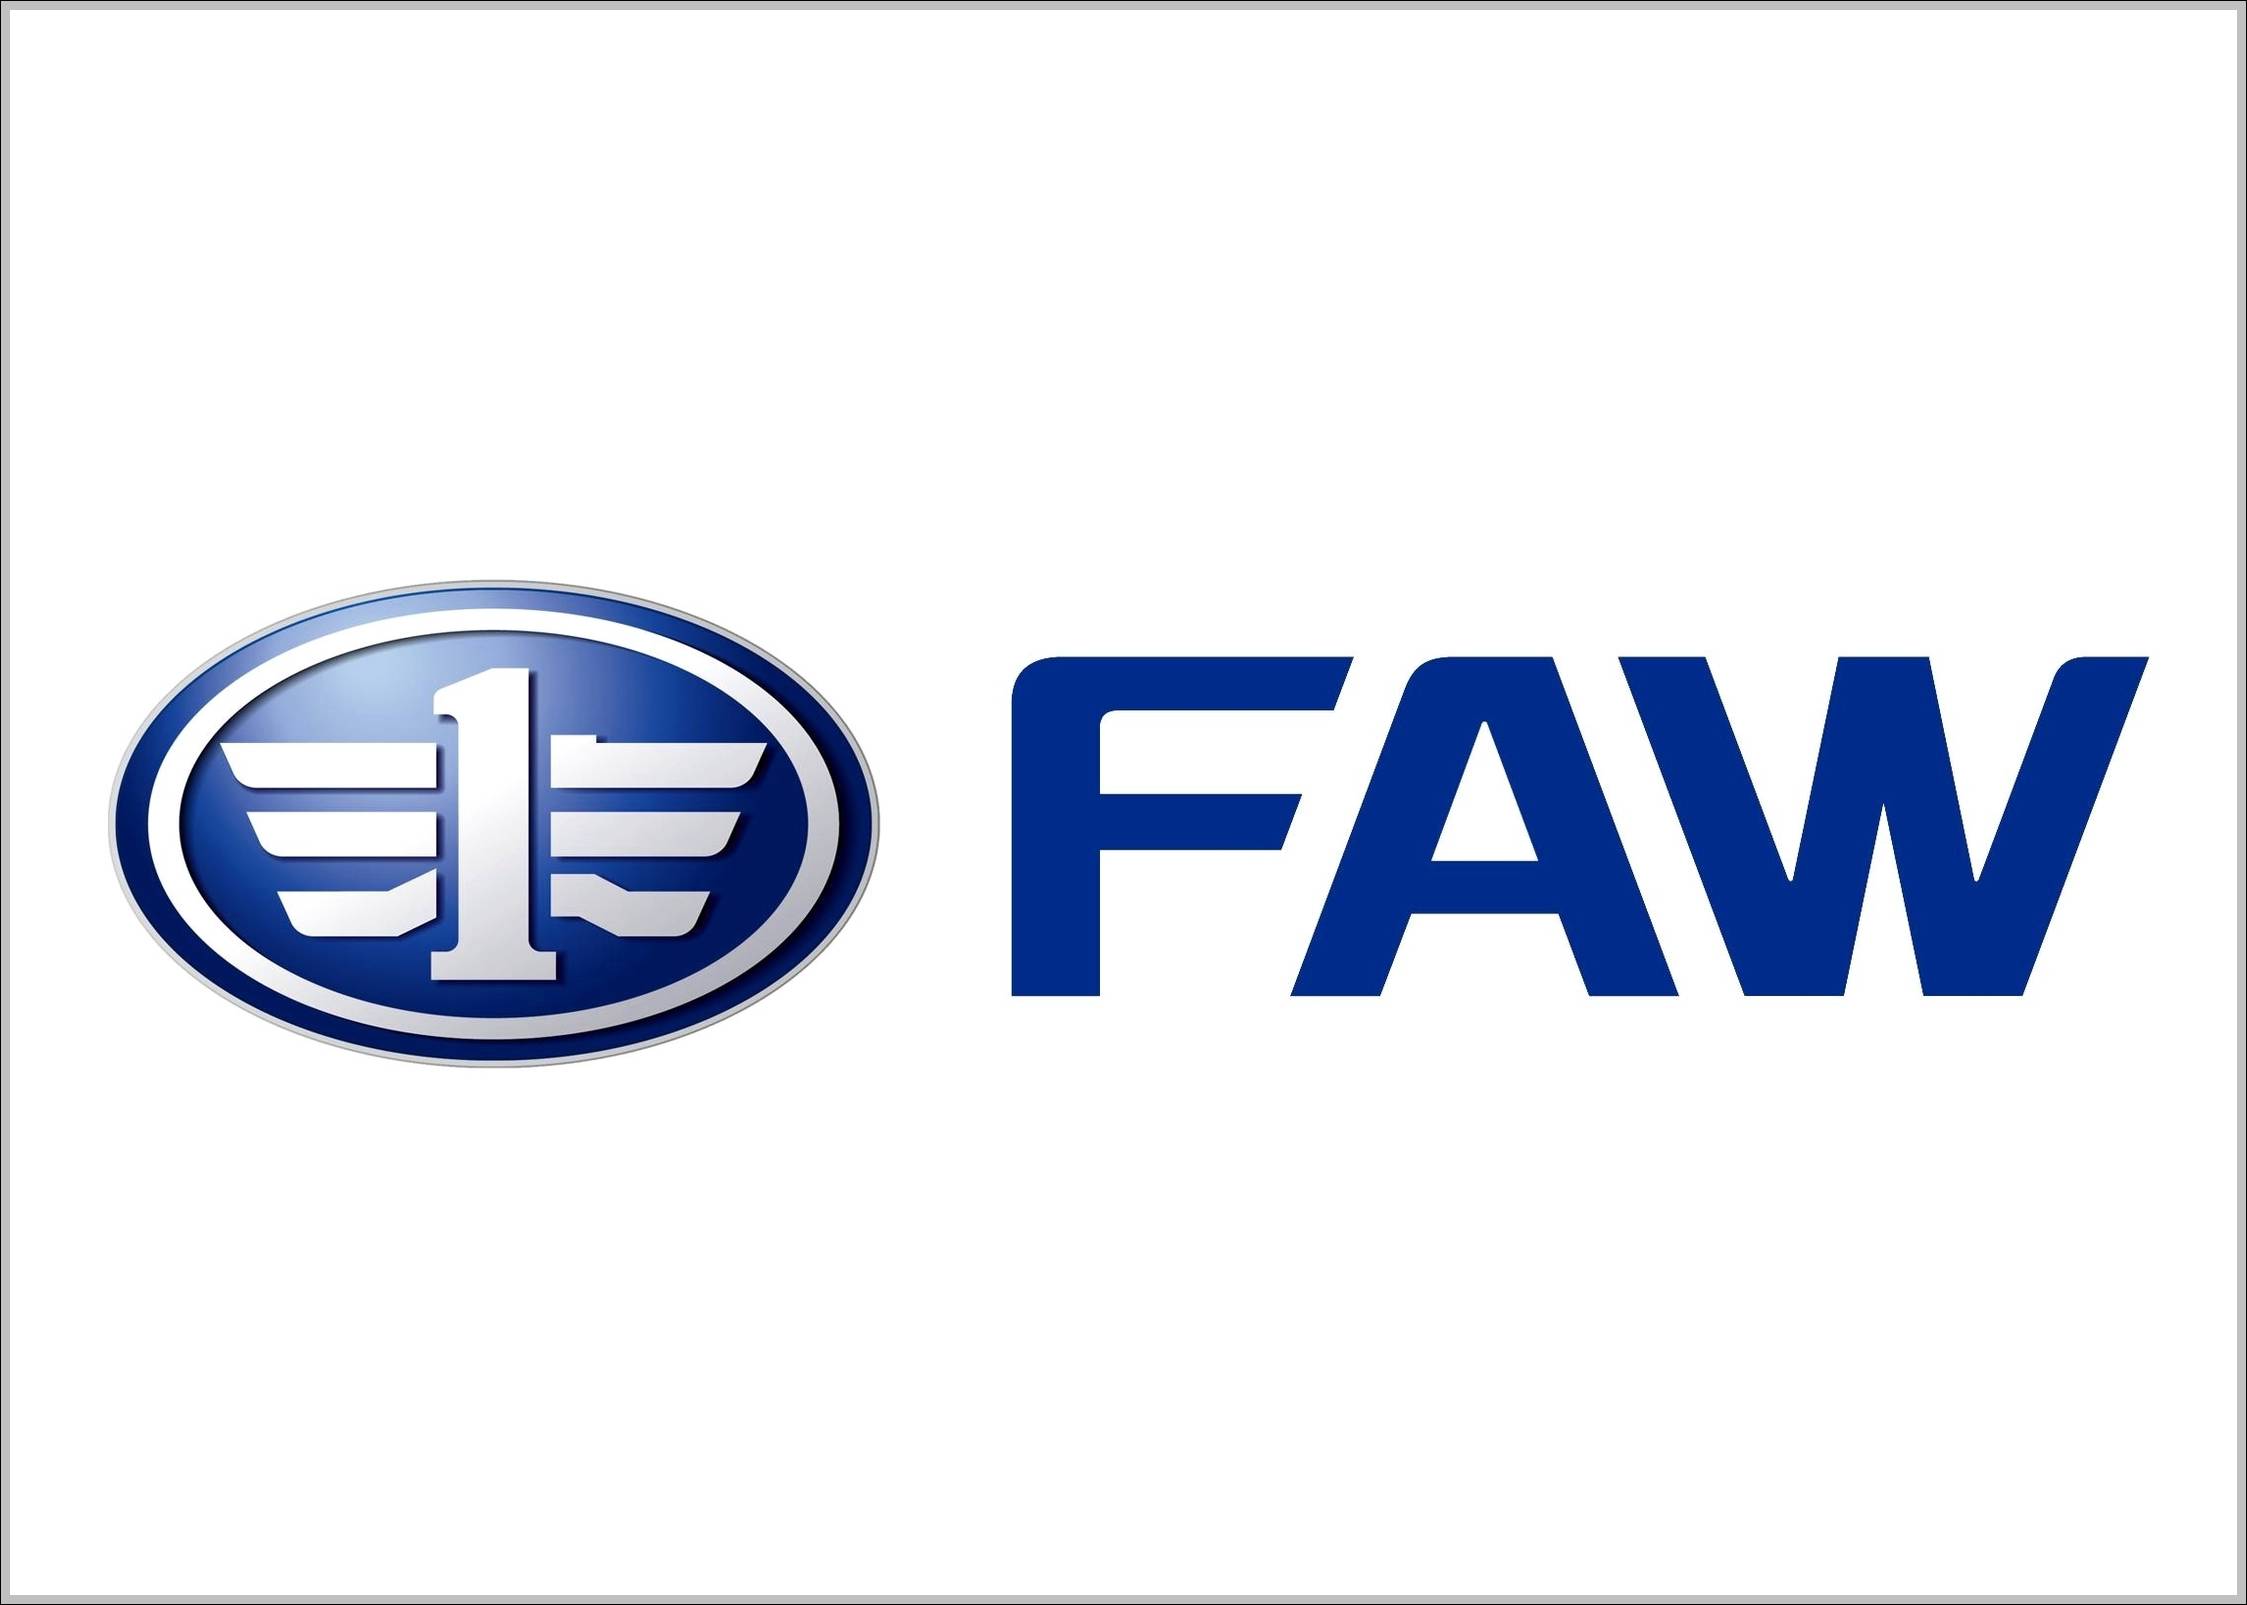 Faw group logo